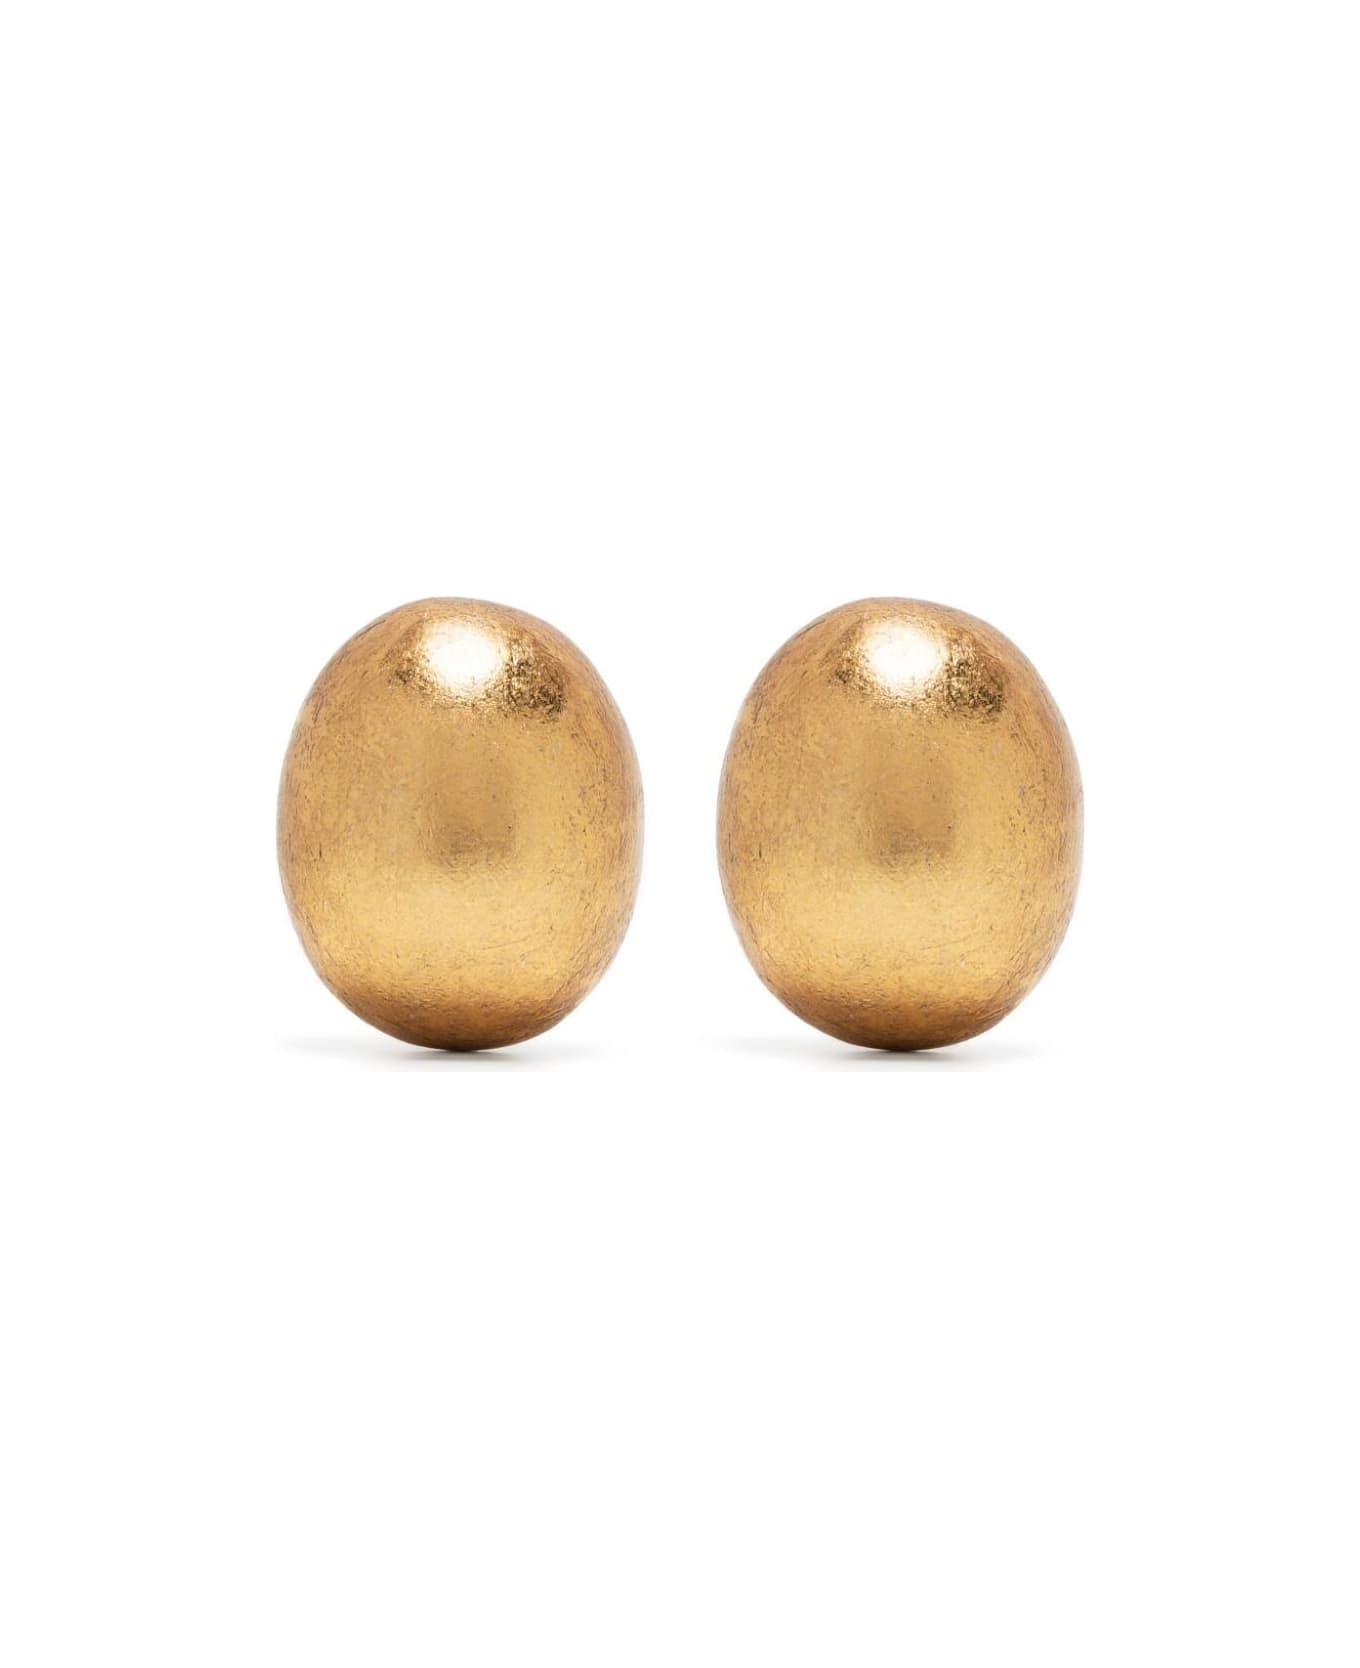 Monies Picta Earring - Gold イヤリング